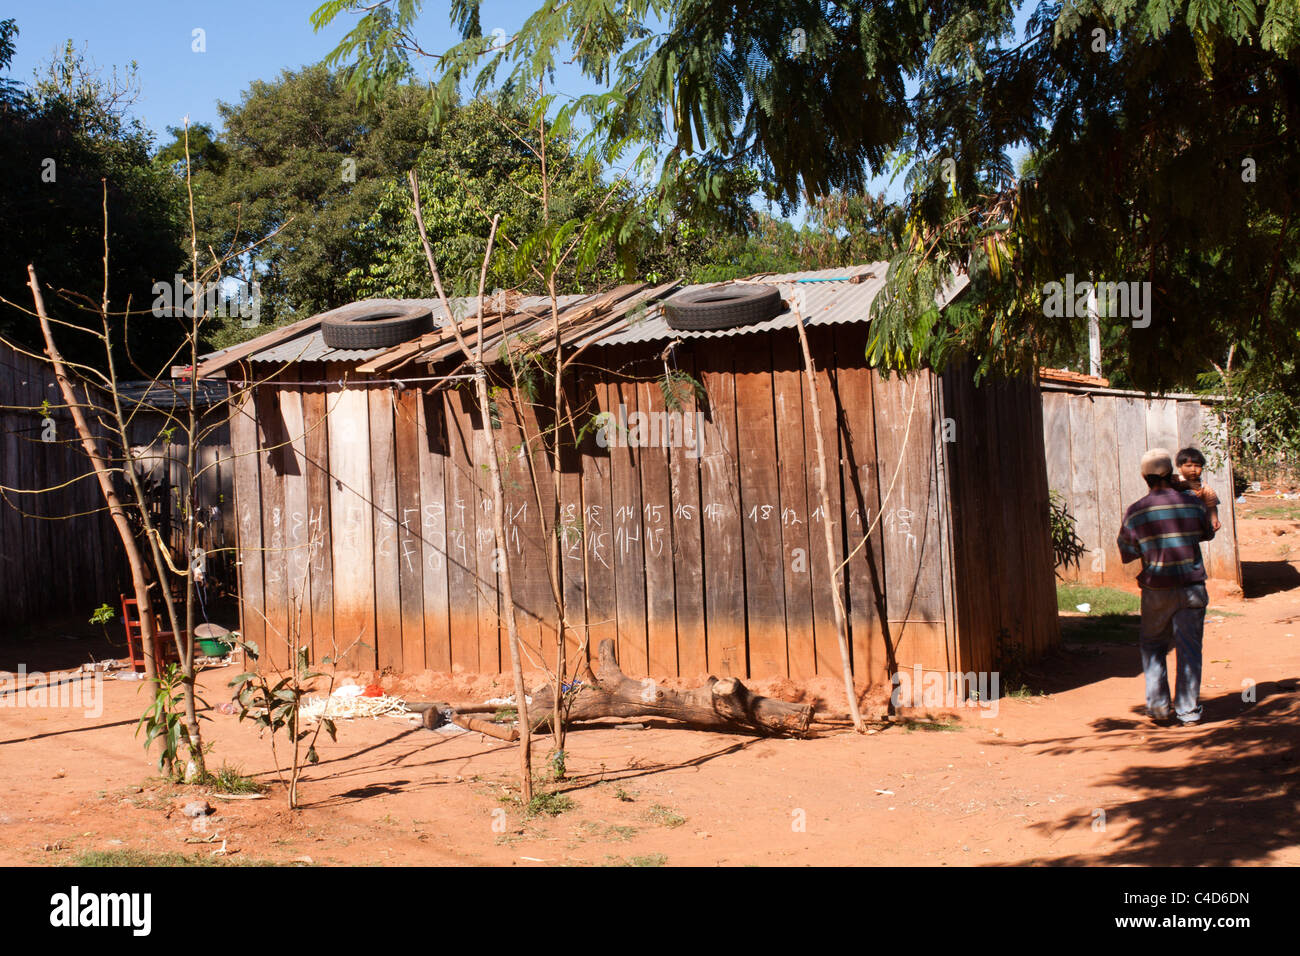 Maka tribe timber made house, shacks, Maka tribe indigenous village on the outskirts of Asuncion, Paraguay Stock Photo